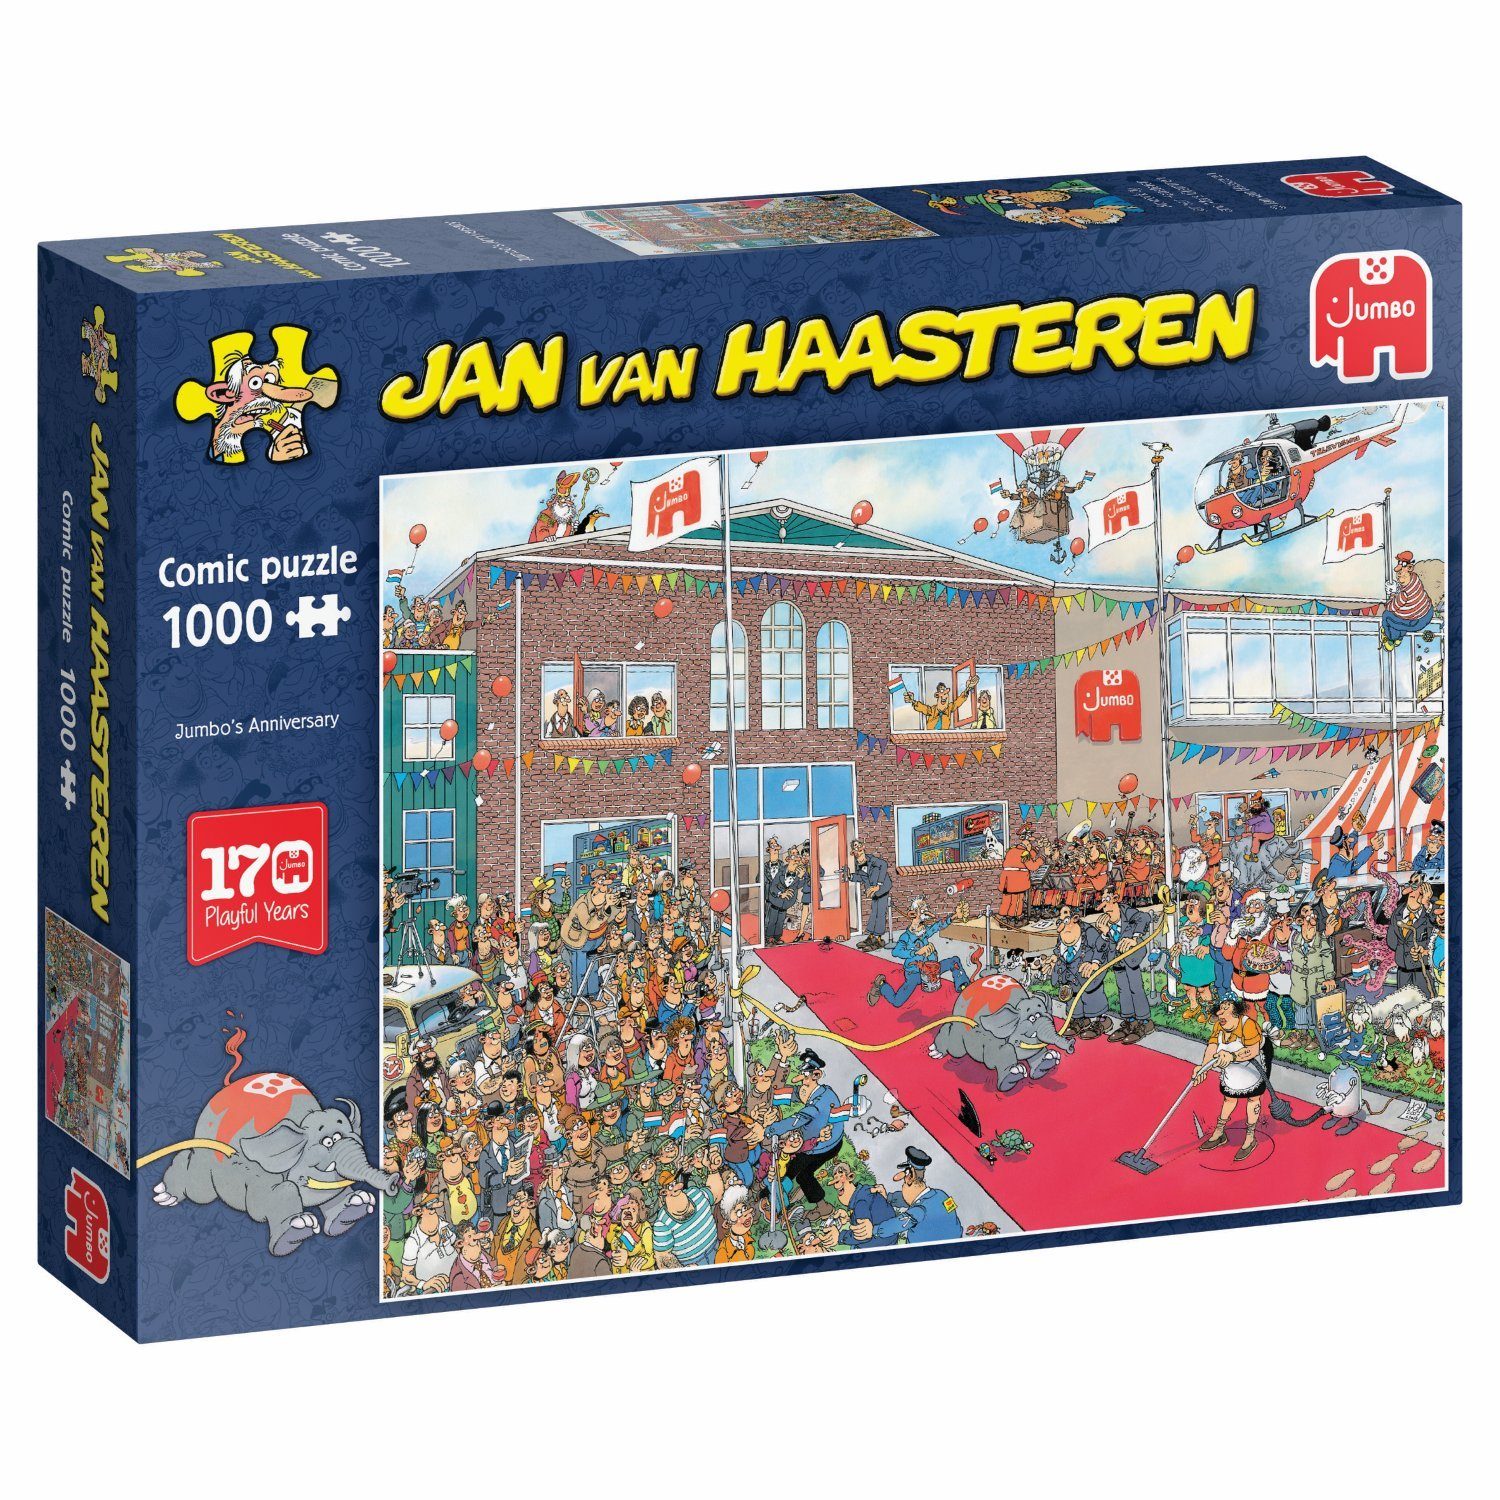 Jumbo Spiele Puzzle Jumbo Spiele Jan van Haasteren 170 Jahre, 1000 Puzzleteile, Made in Europe